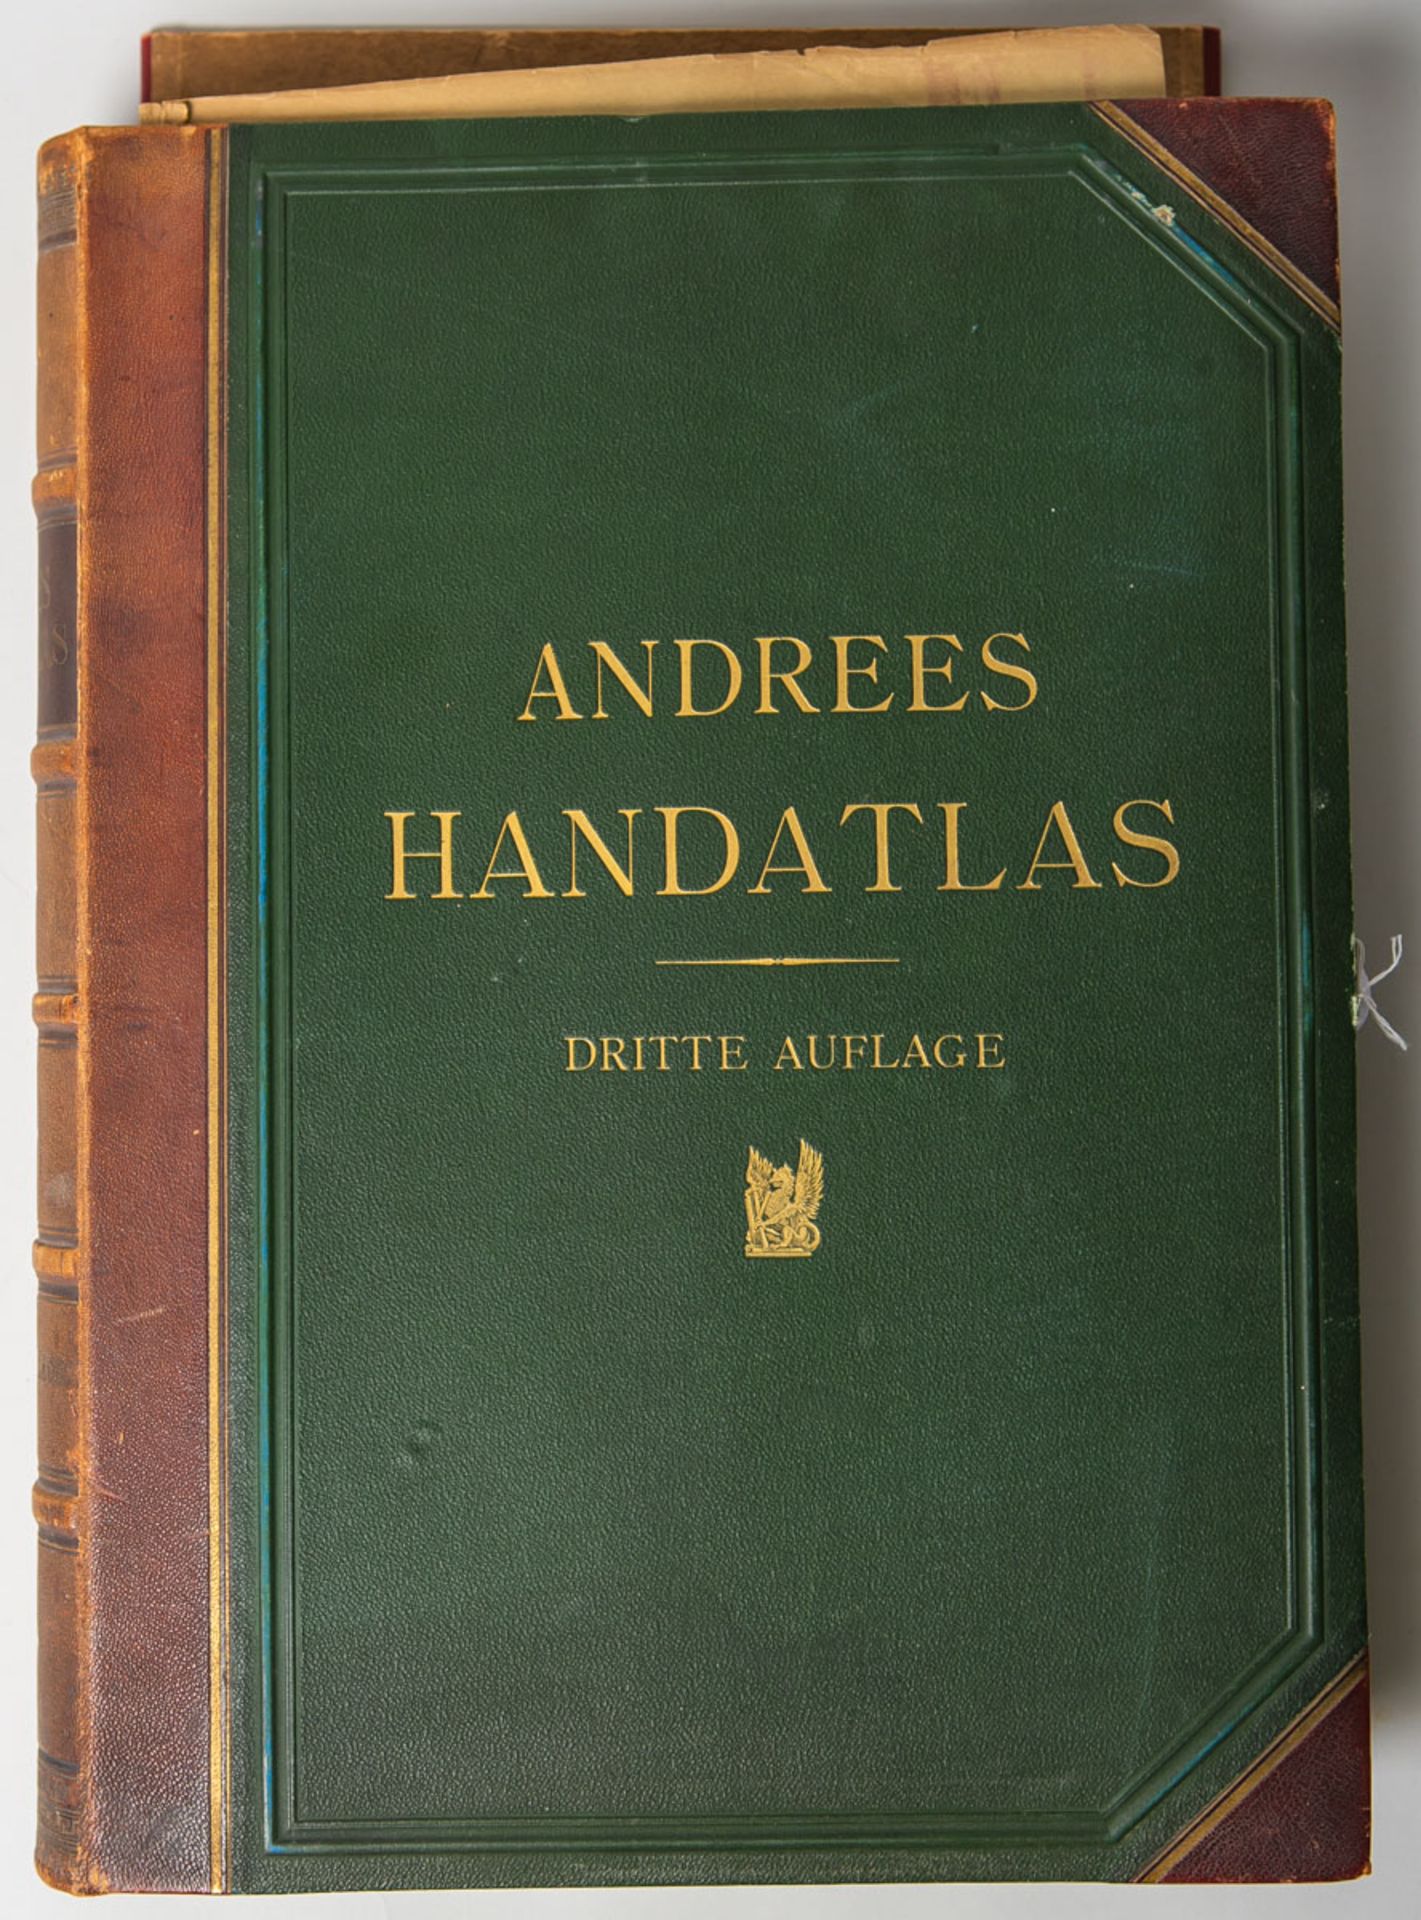 Andrees, Richard, "Allgemeiner Handatlas"